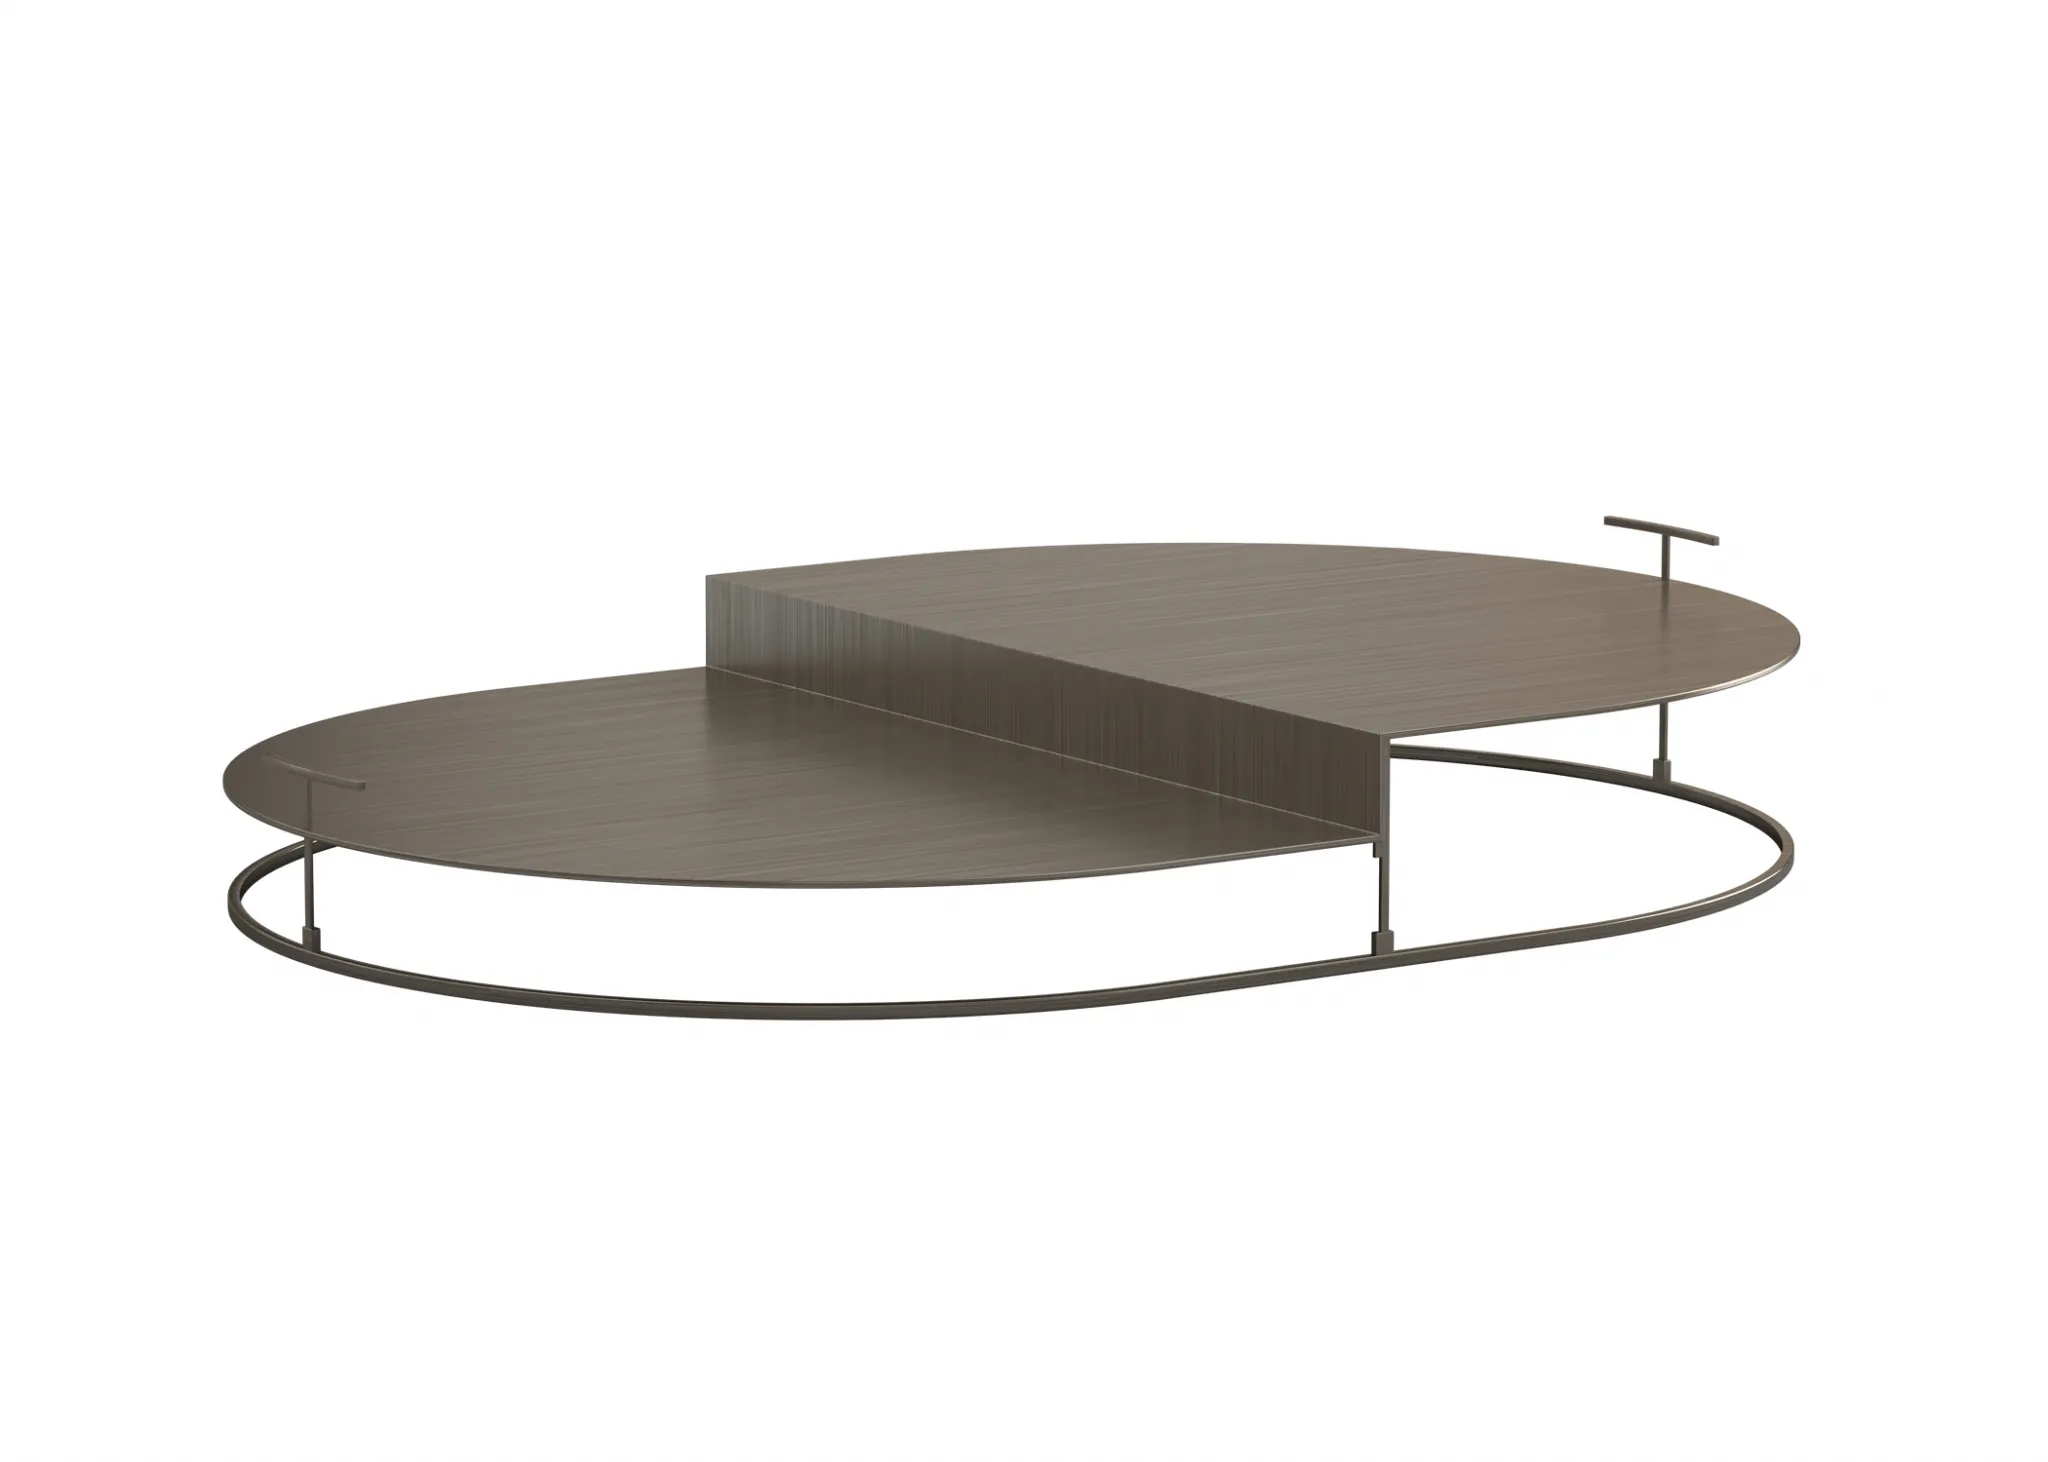 FURNITURE 3D MODELS – TABLES – 0044